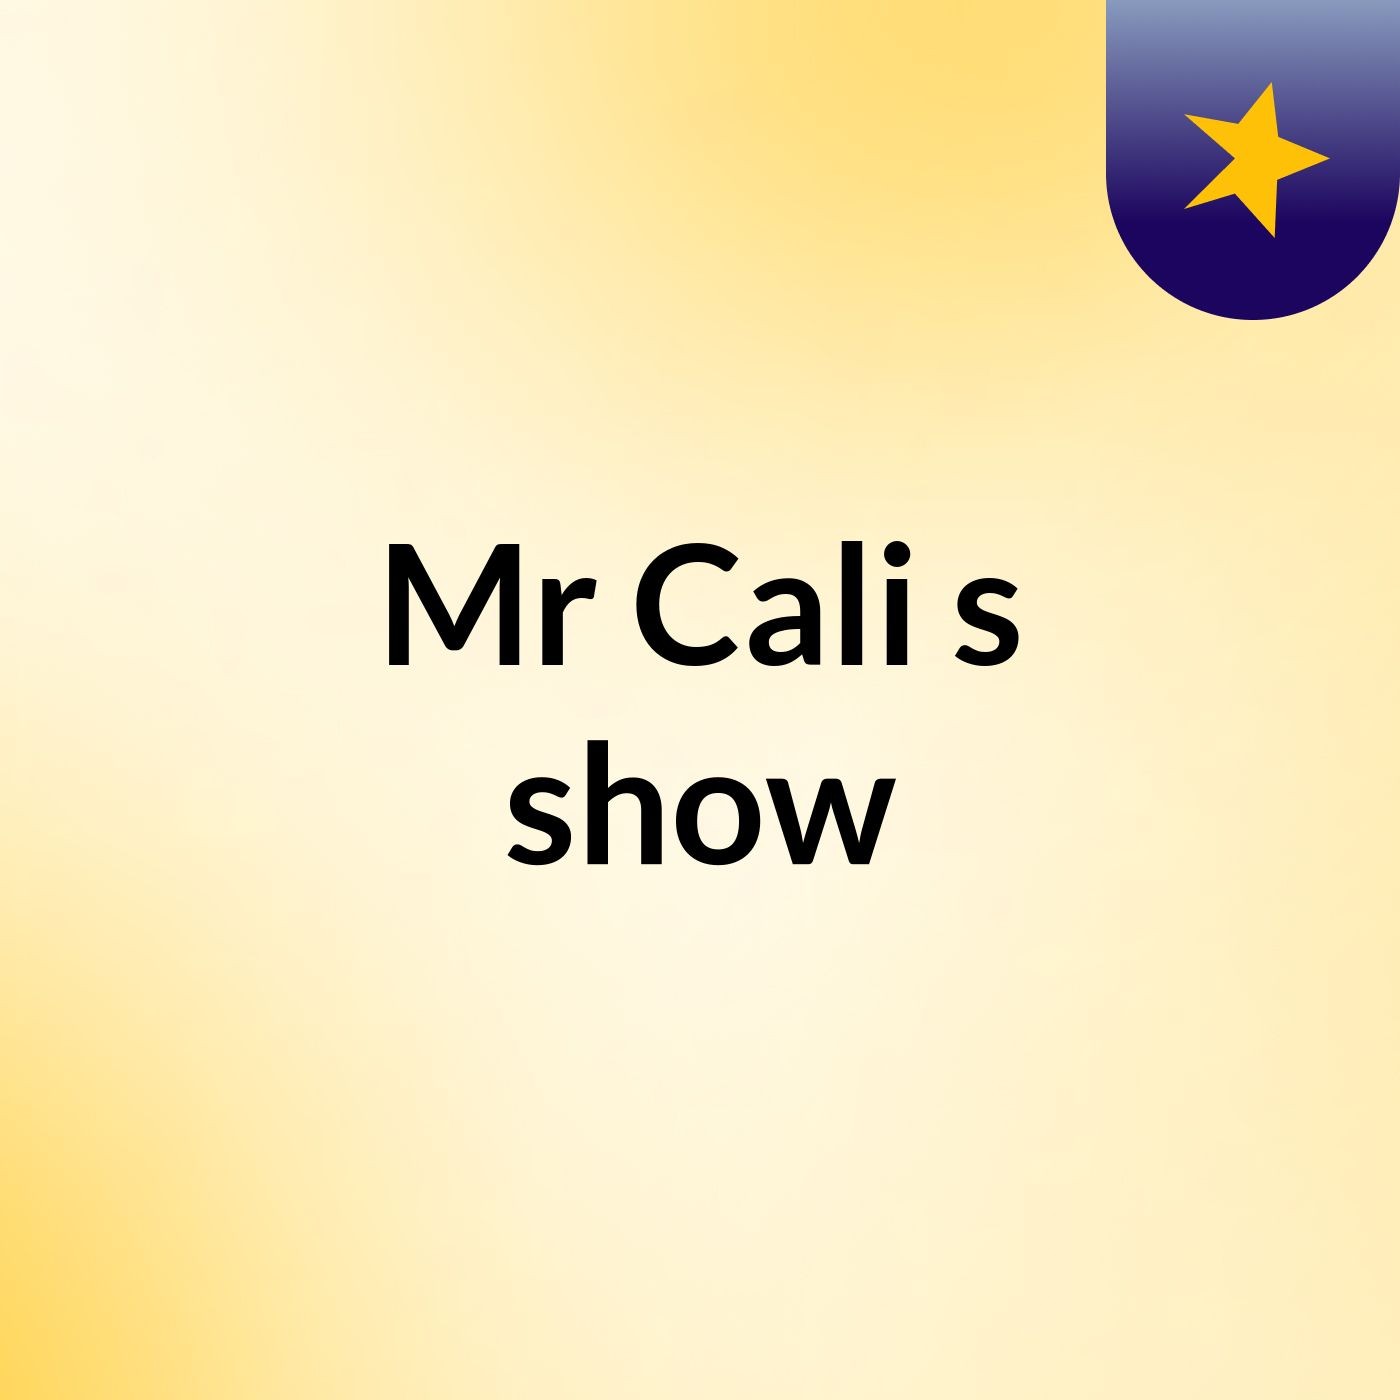 Mr Cali's show